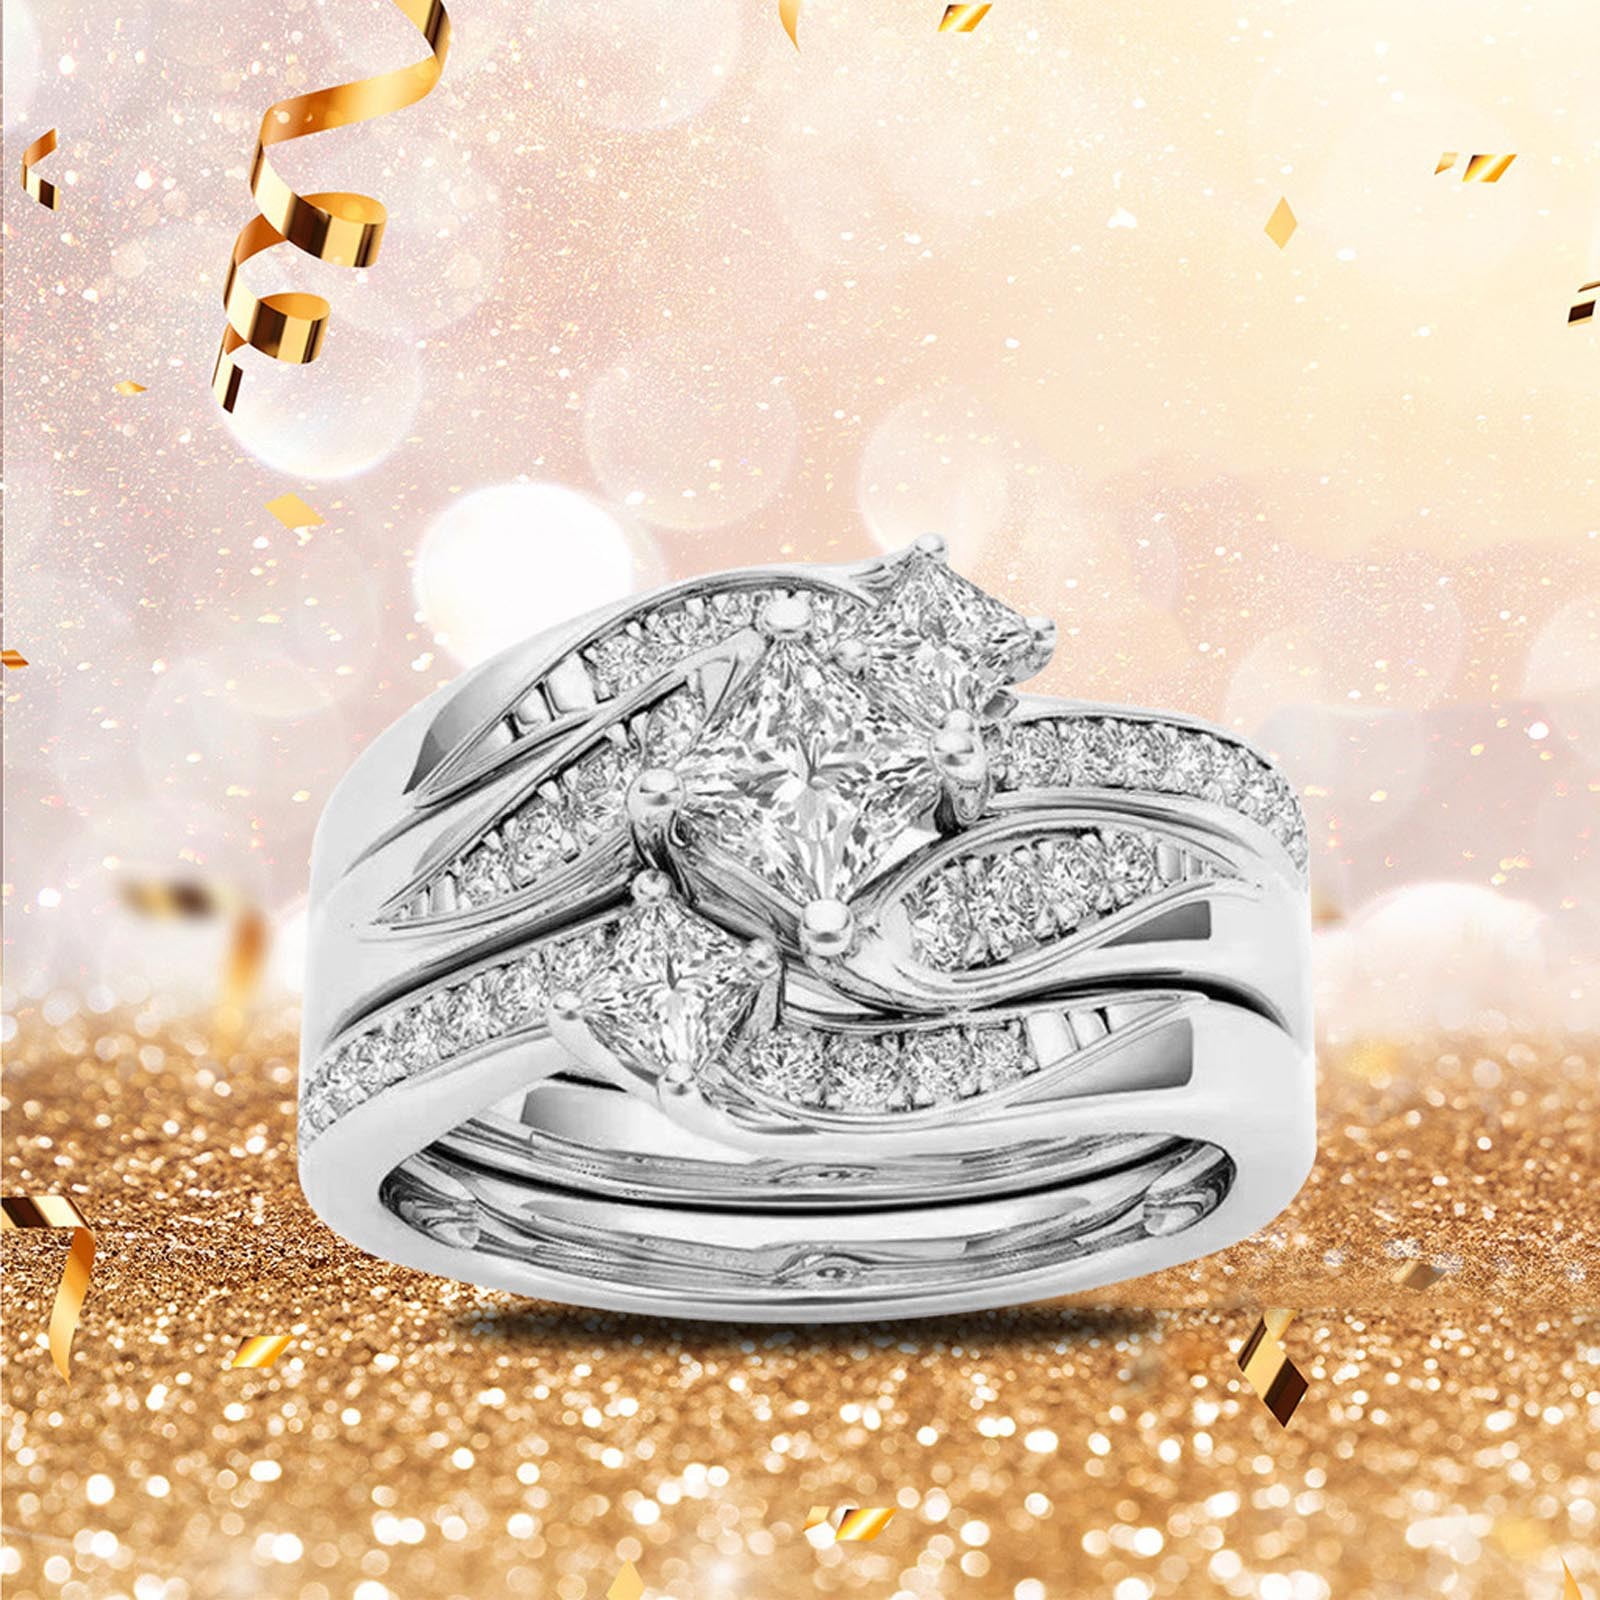 JewelJewels Promise Rings in The Wedding Ring Shop - Walmart.com